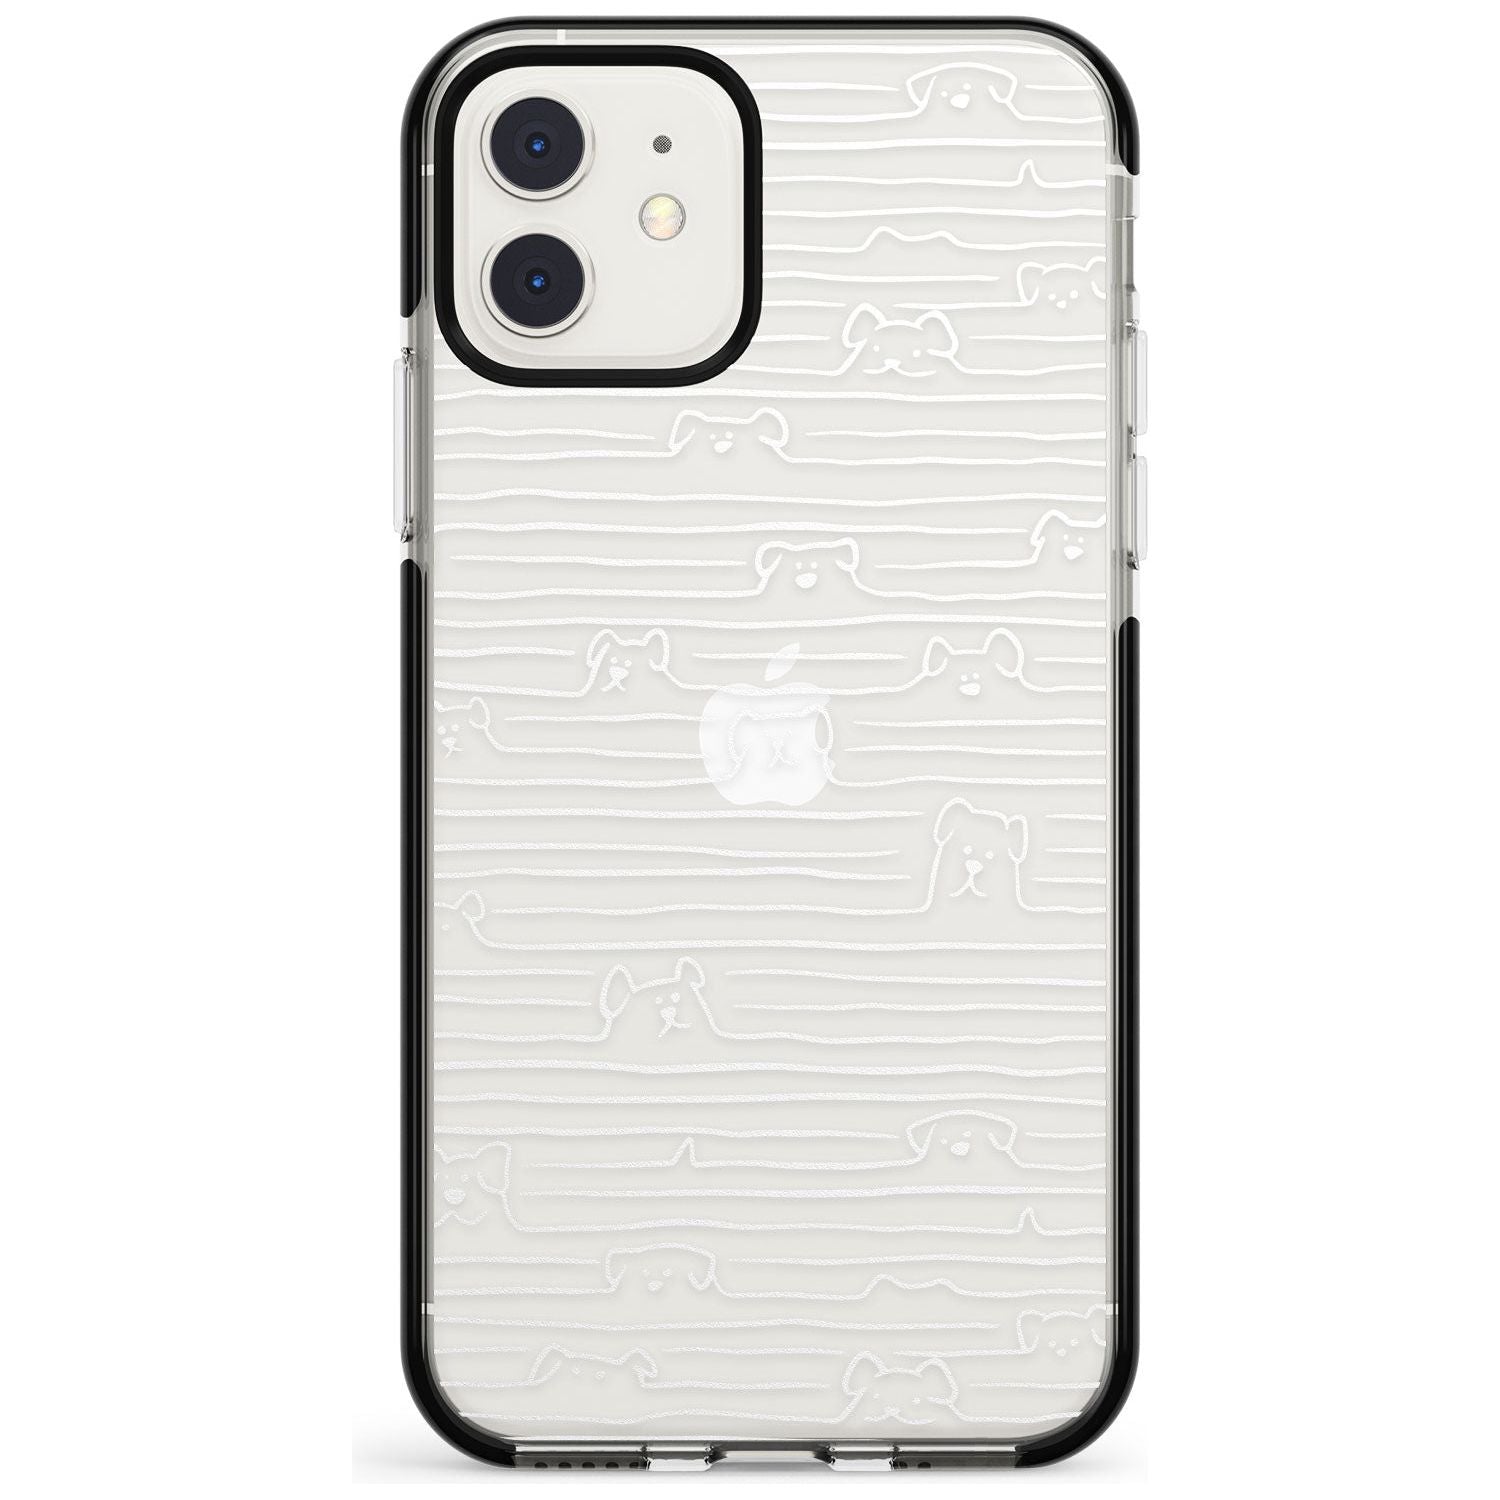 Dog Line Art - White Black Impact Phone Case for iPhone 11